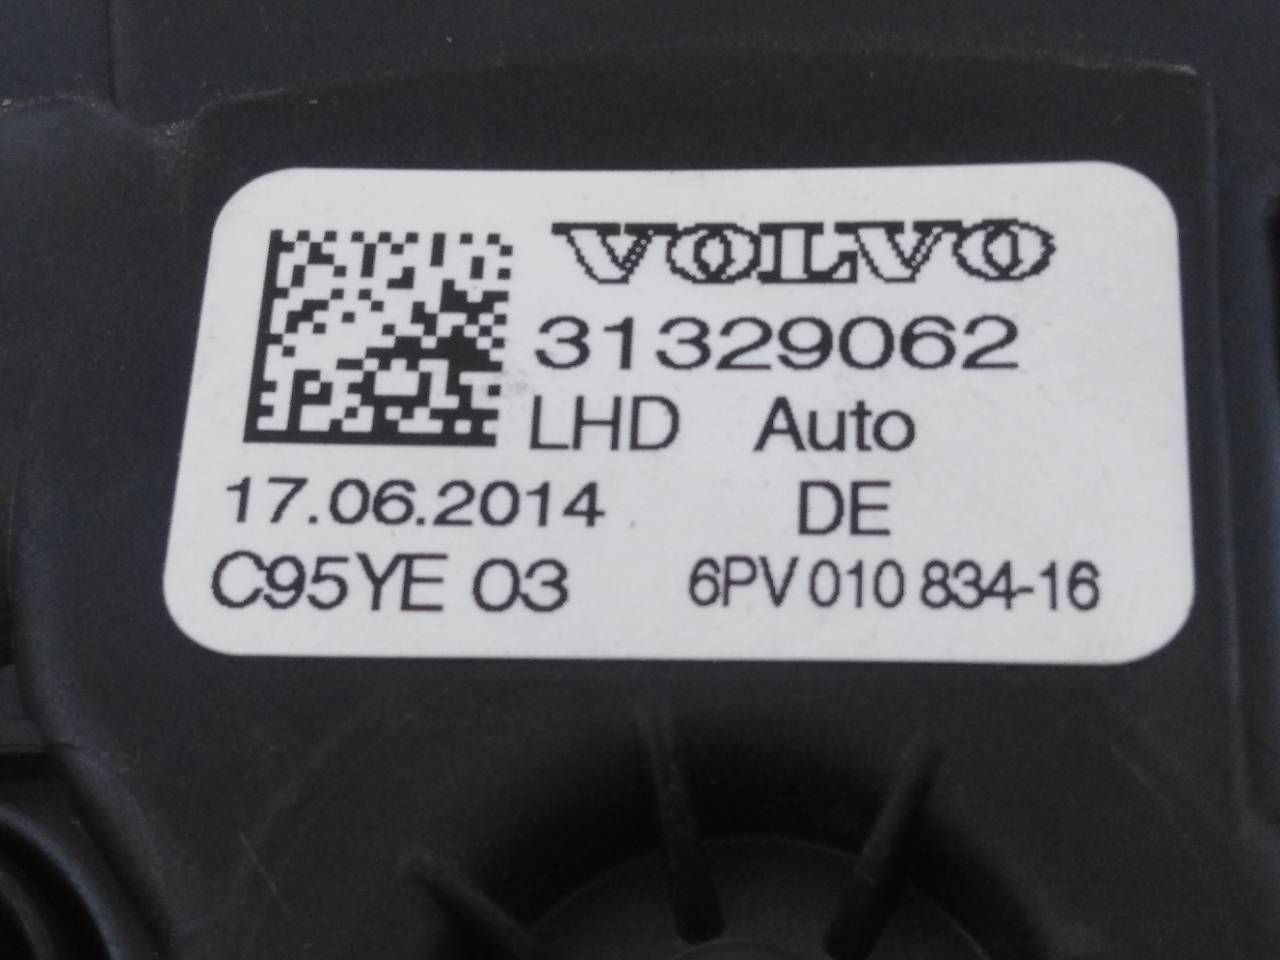 VOLVO V60 1 generation (2010-2020) Педаль газа 6PV01083416, 31329062, E3-B5-35-4 18713125